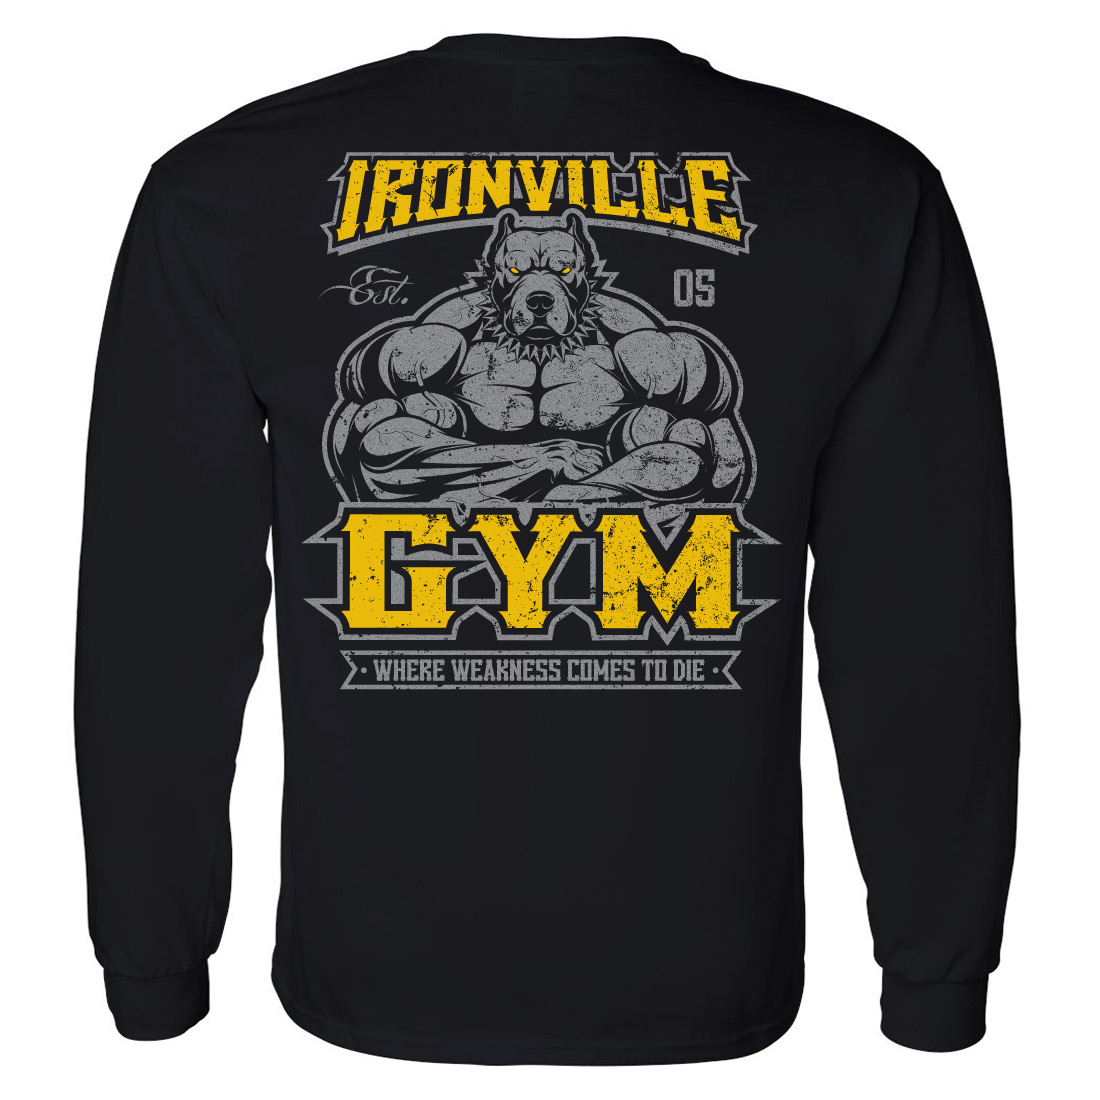 Ironville Gym Pitbull - LONG SLEEVE T-SHIRT